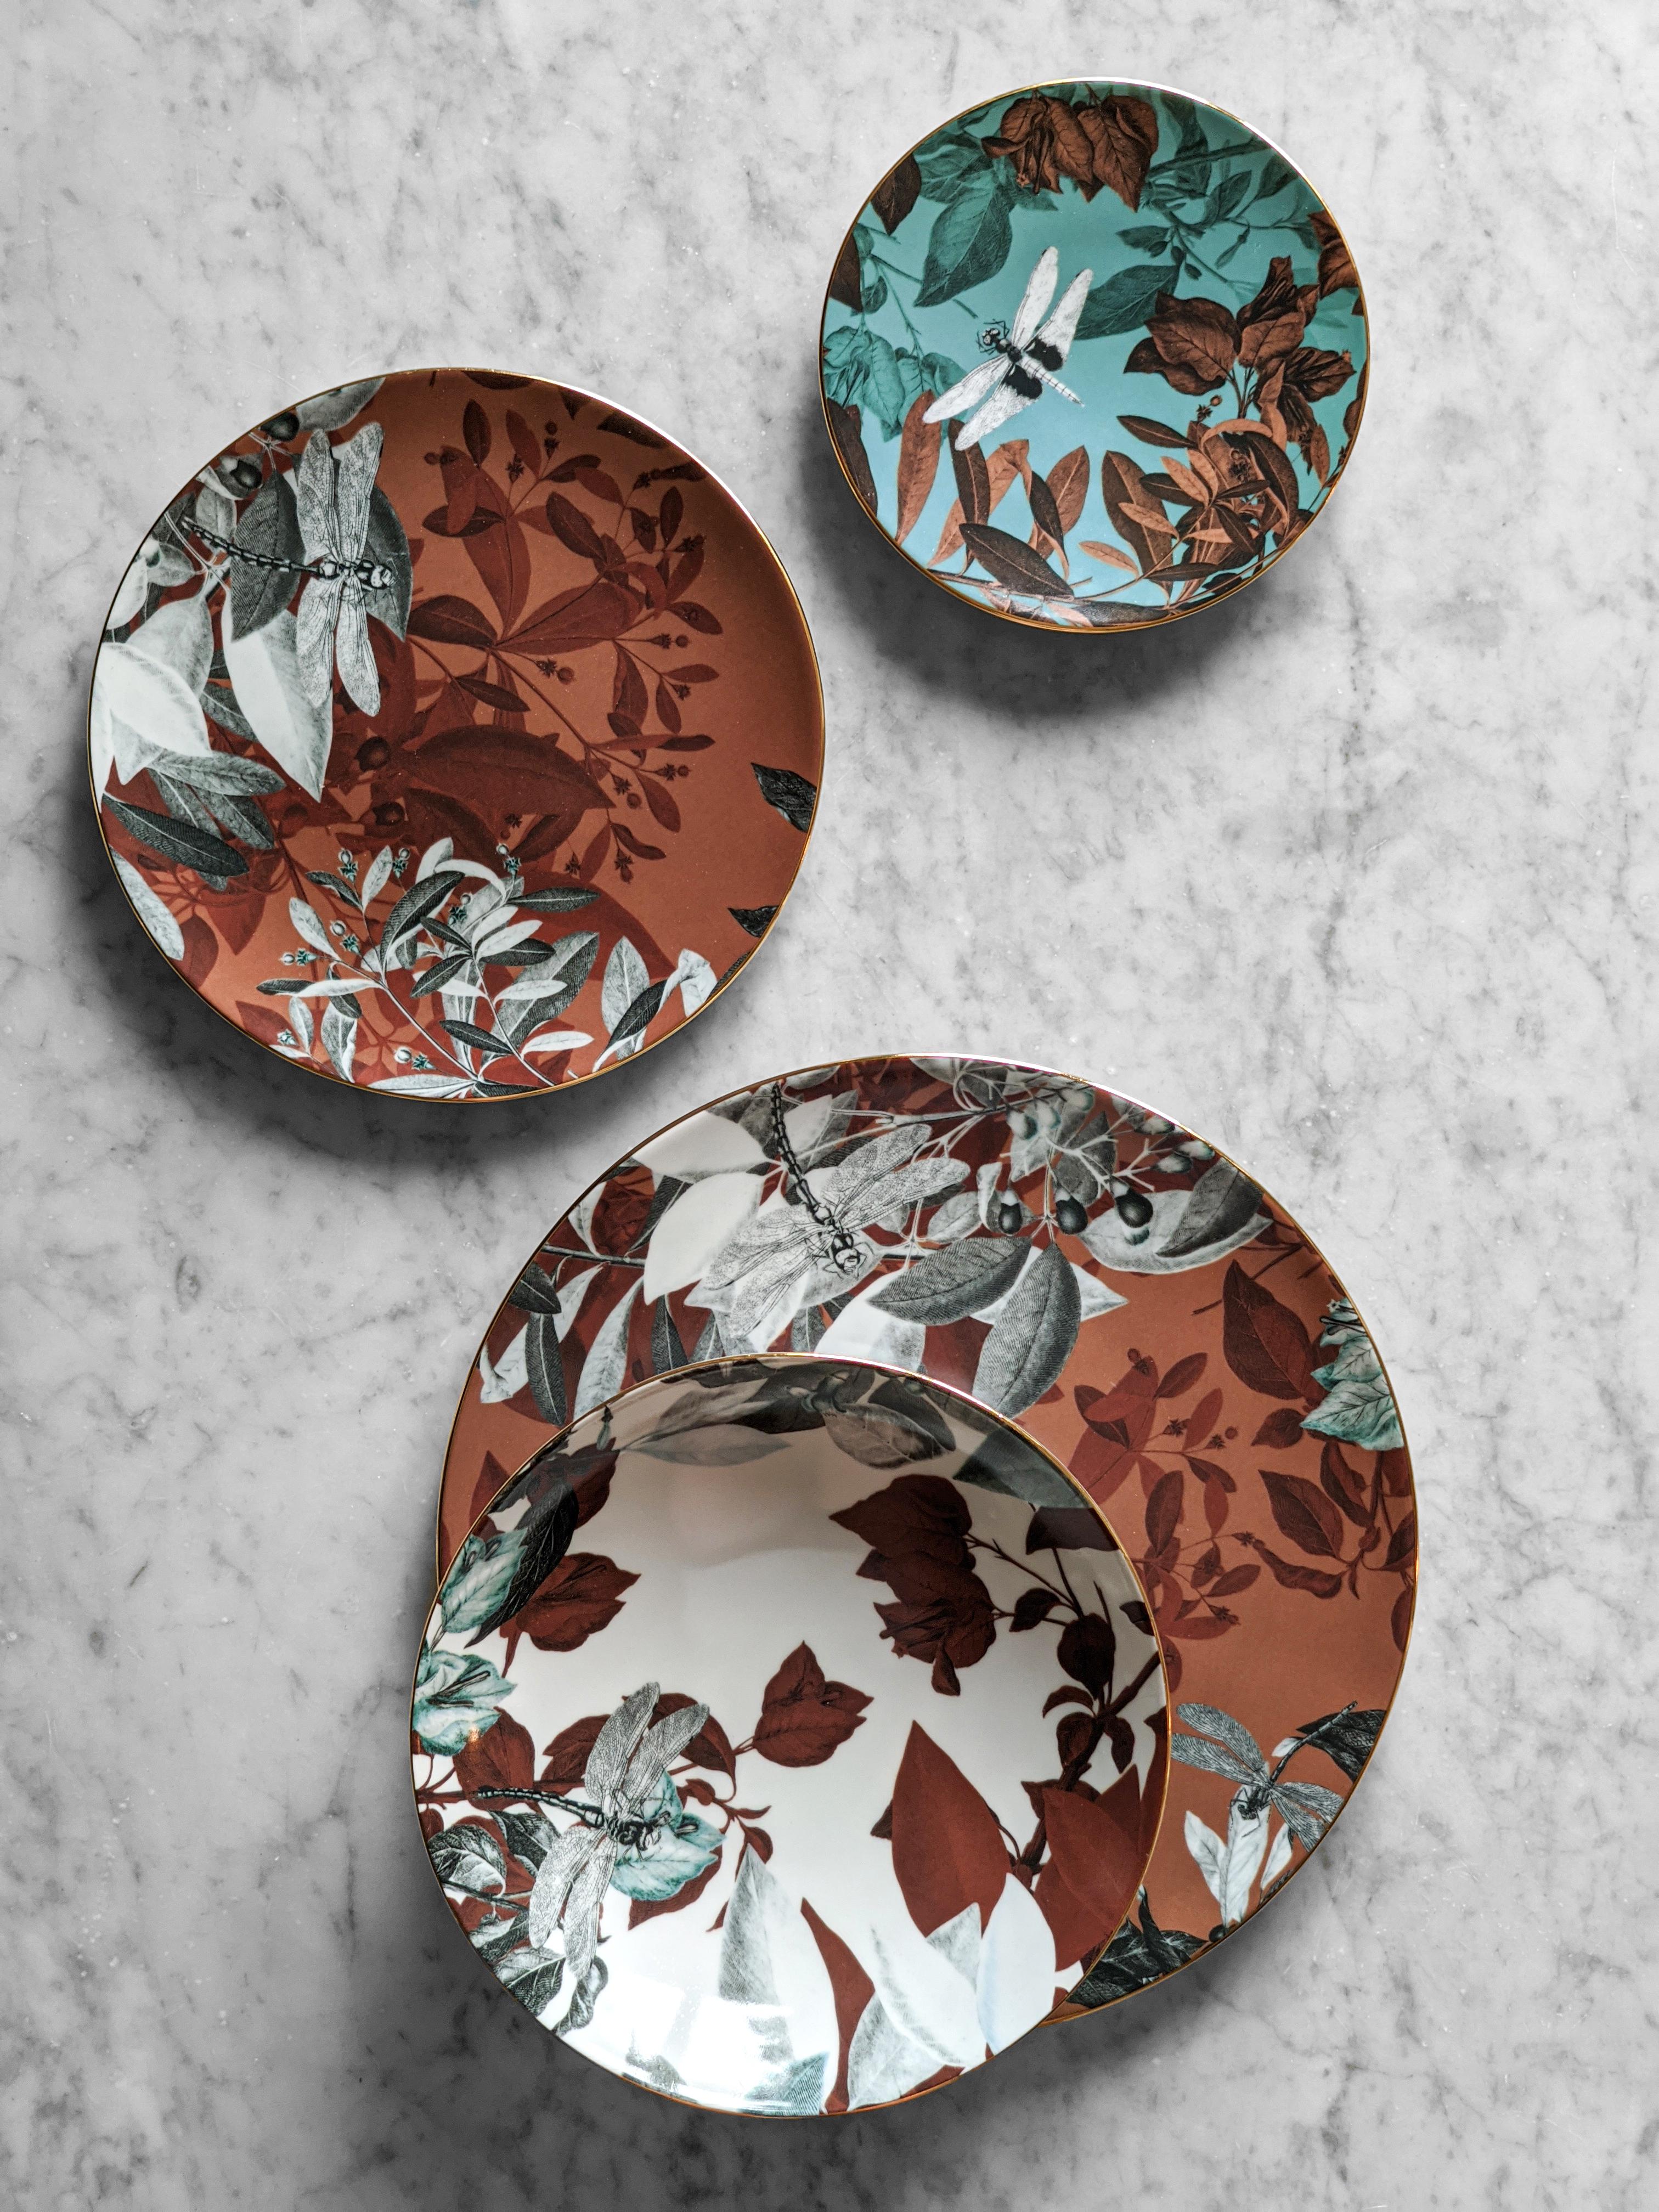 Black Dragon, Six Contemporary Porcelain Dinner Plates with Decorative Design For Sale 4